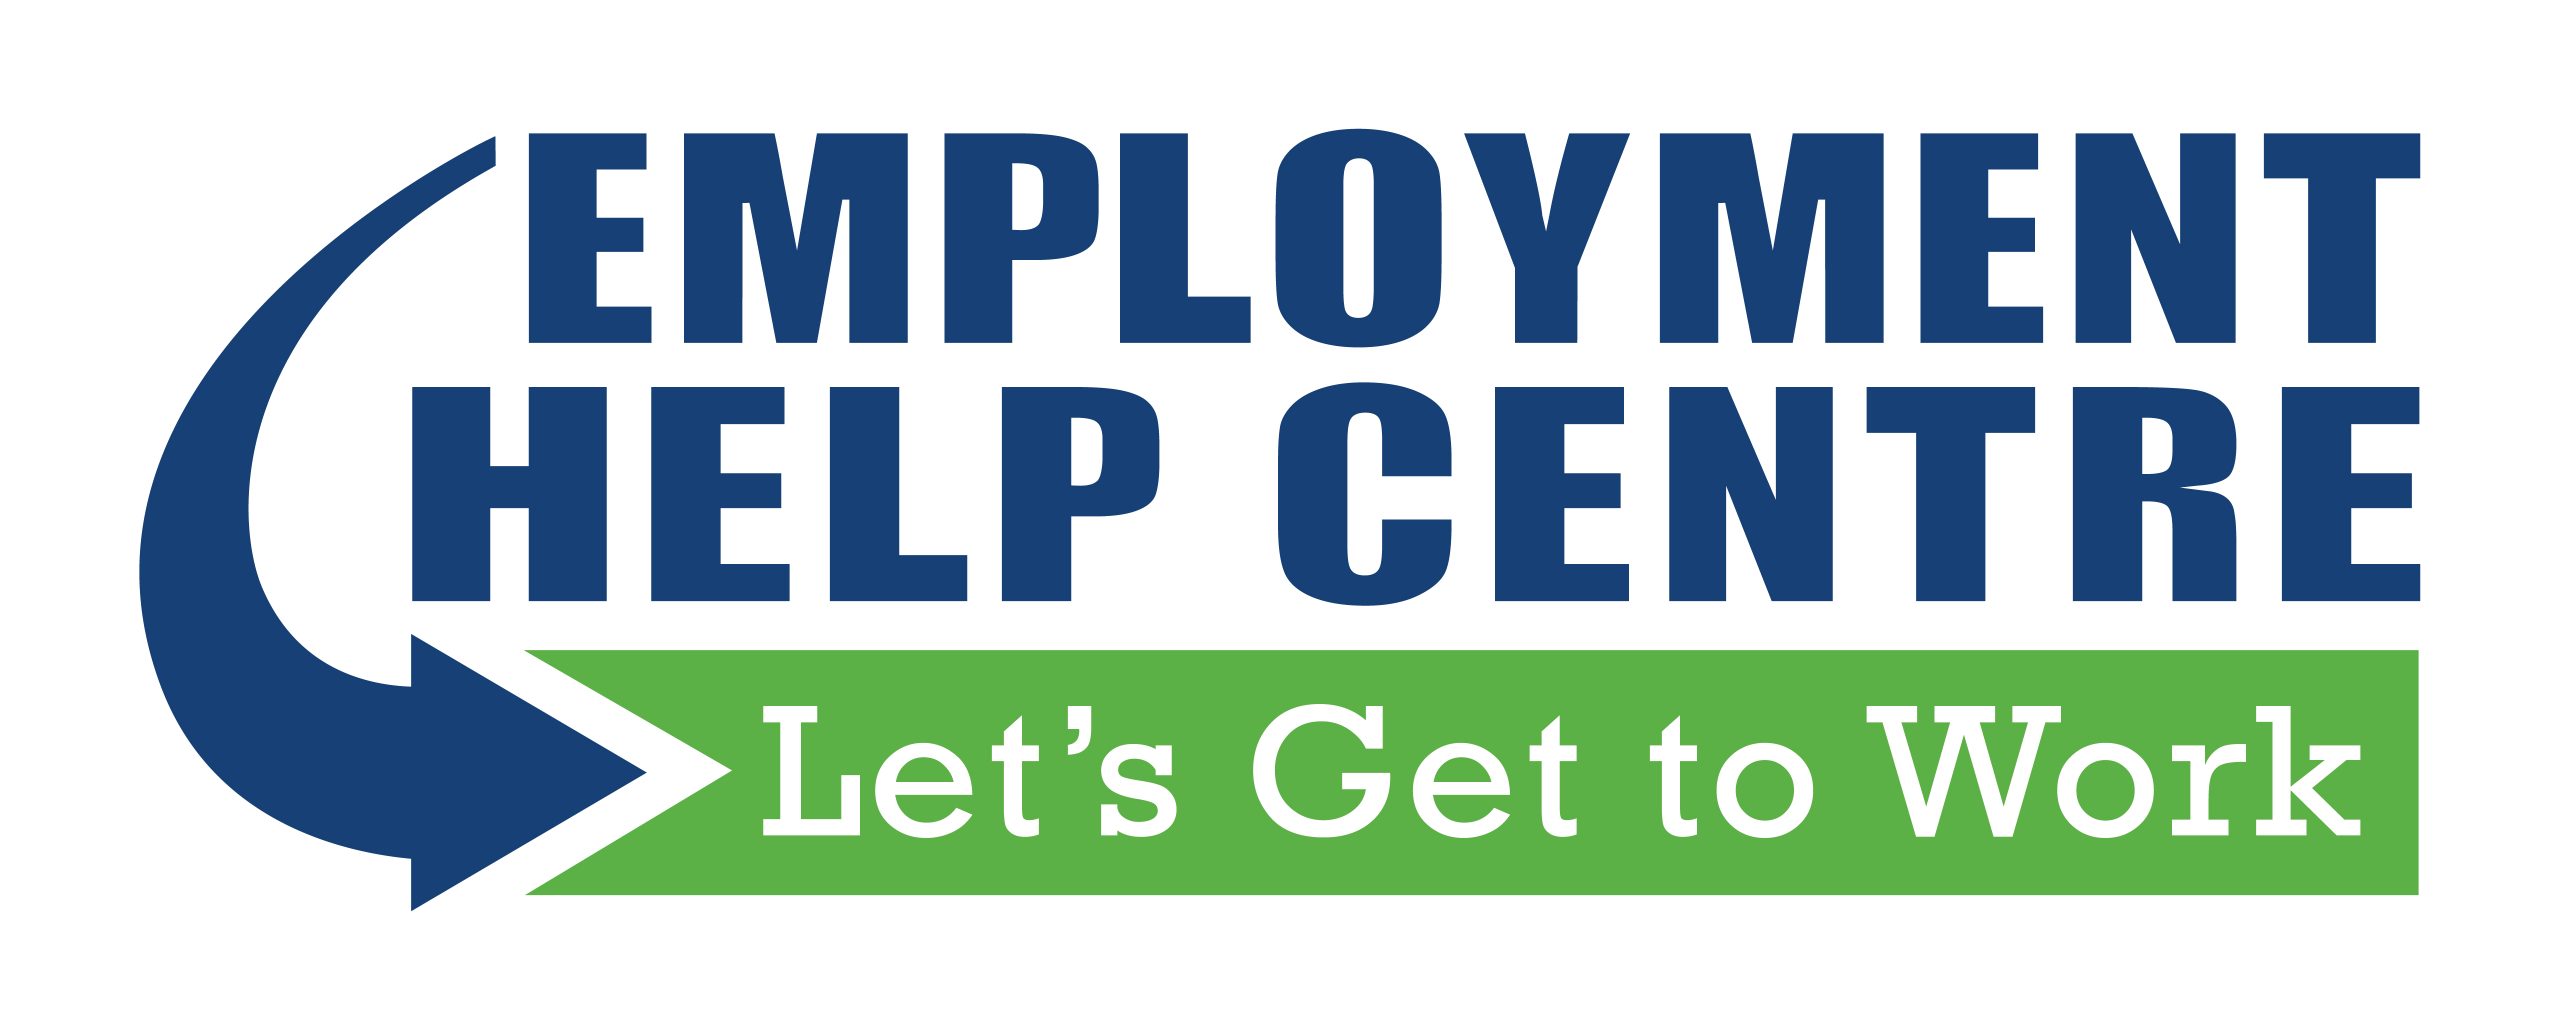 Employment Help Centre